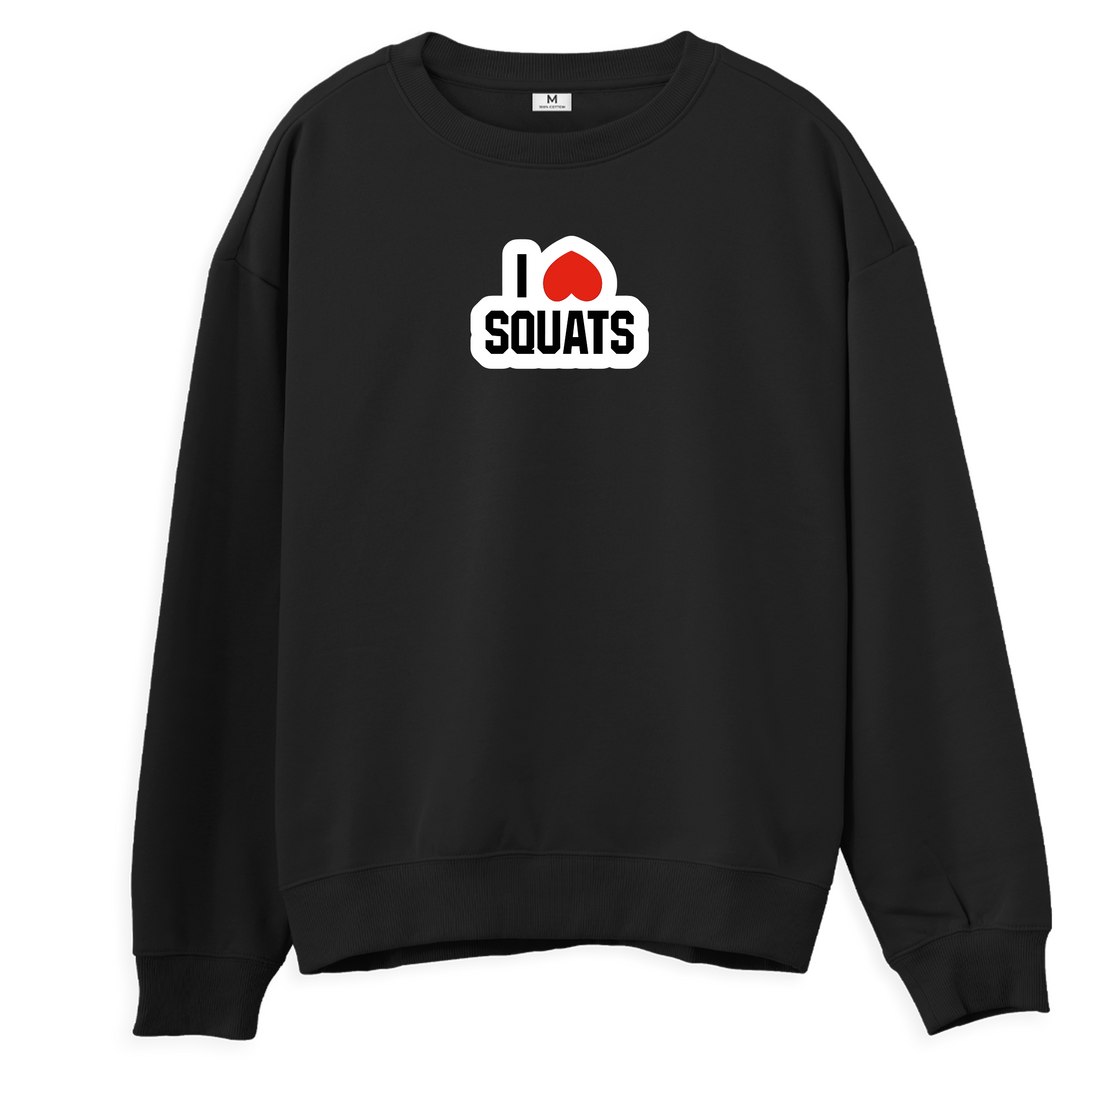 Squats - Sweatshirt